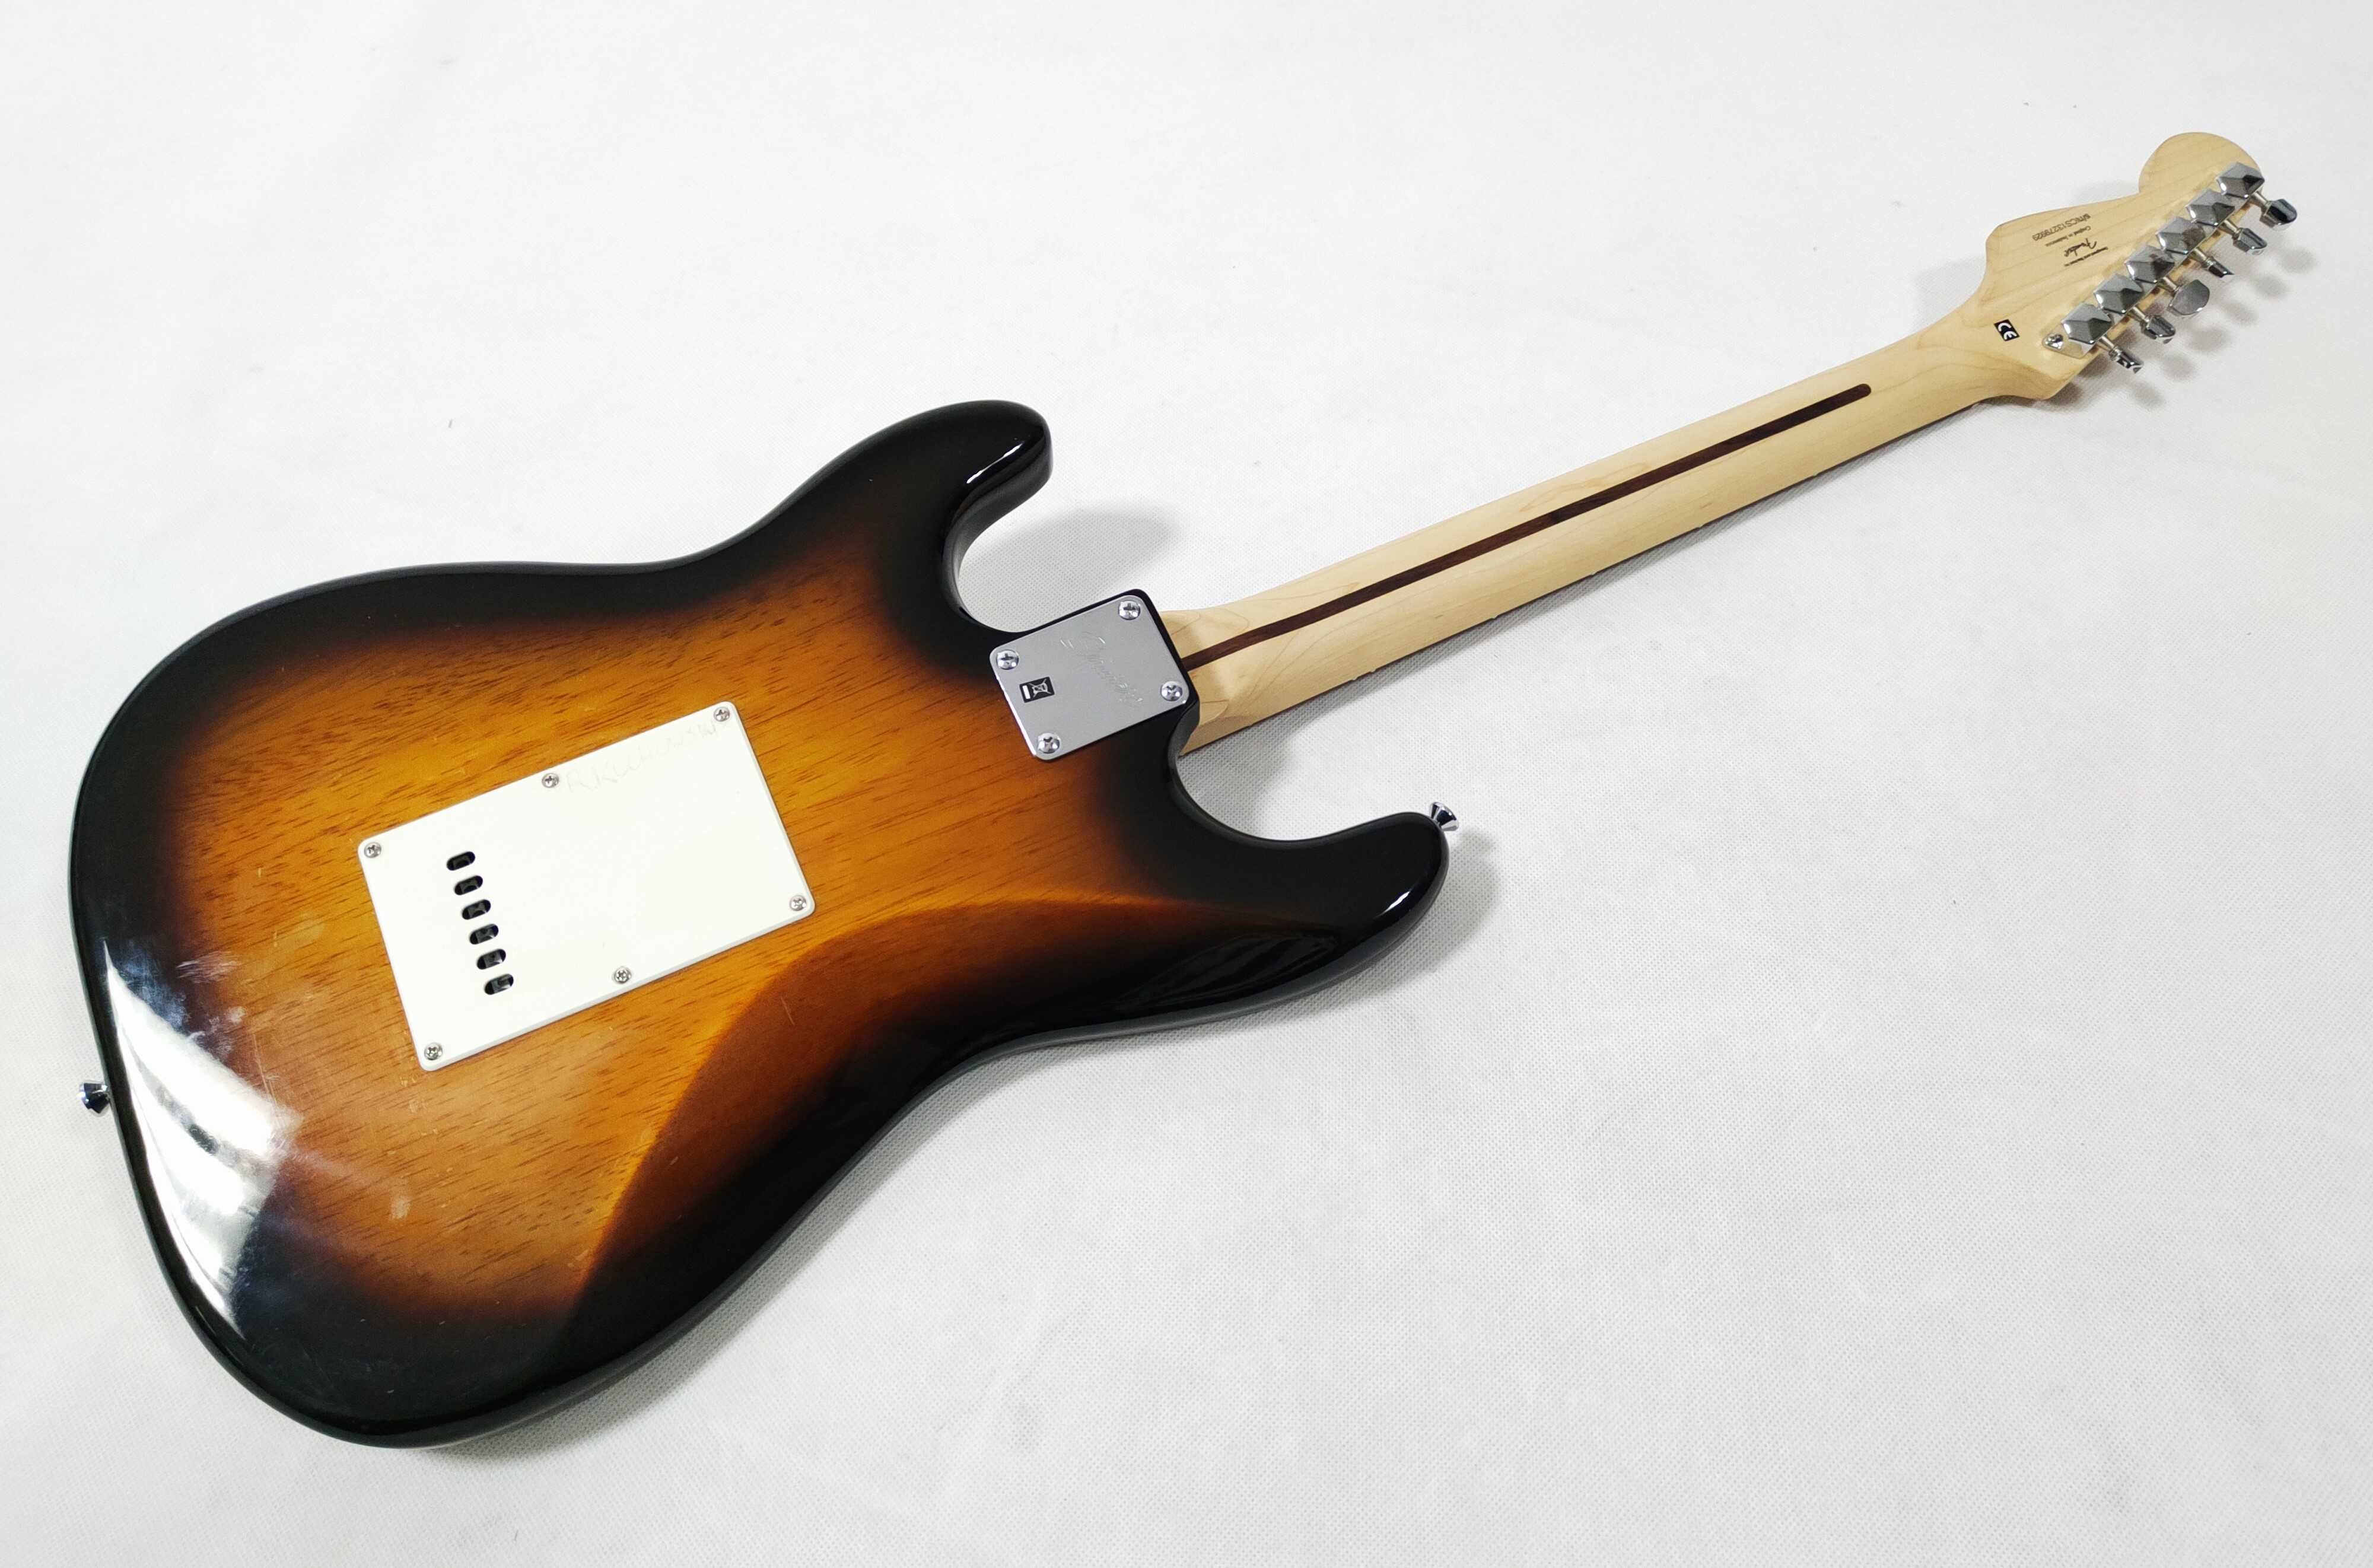 Gitara Squier Bullet Stratocaster made in Indonesia